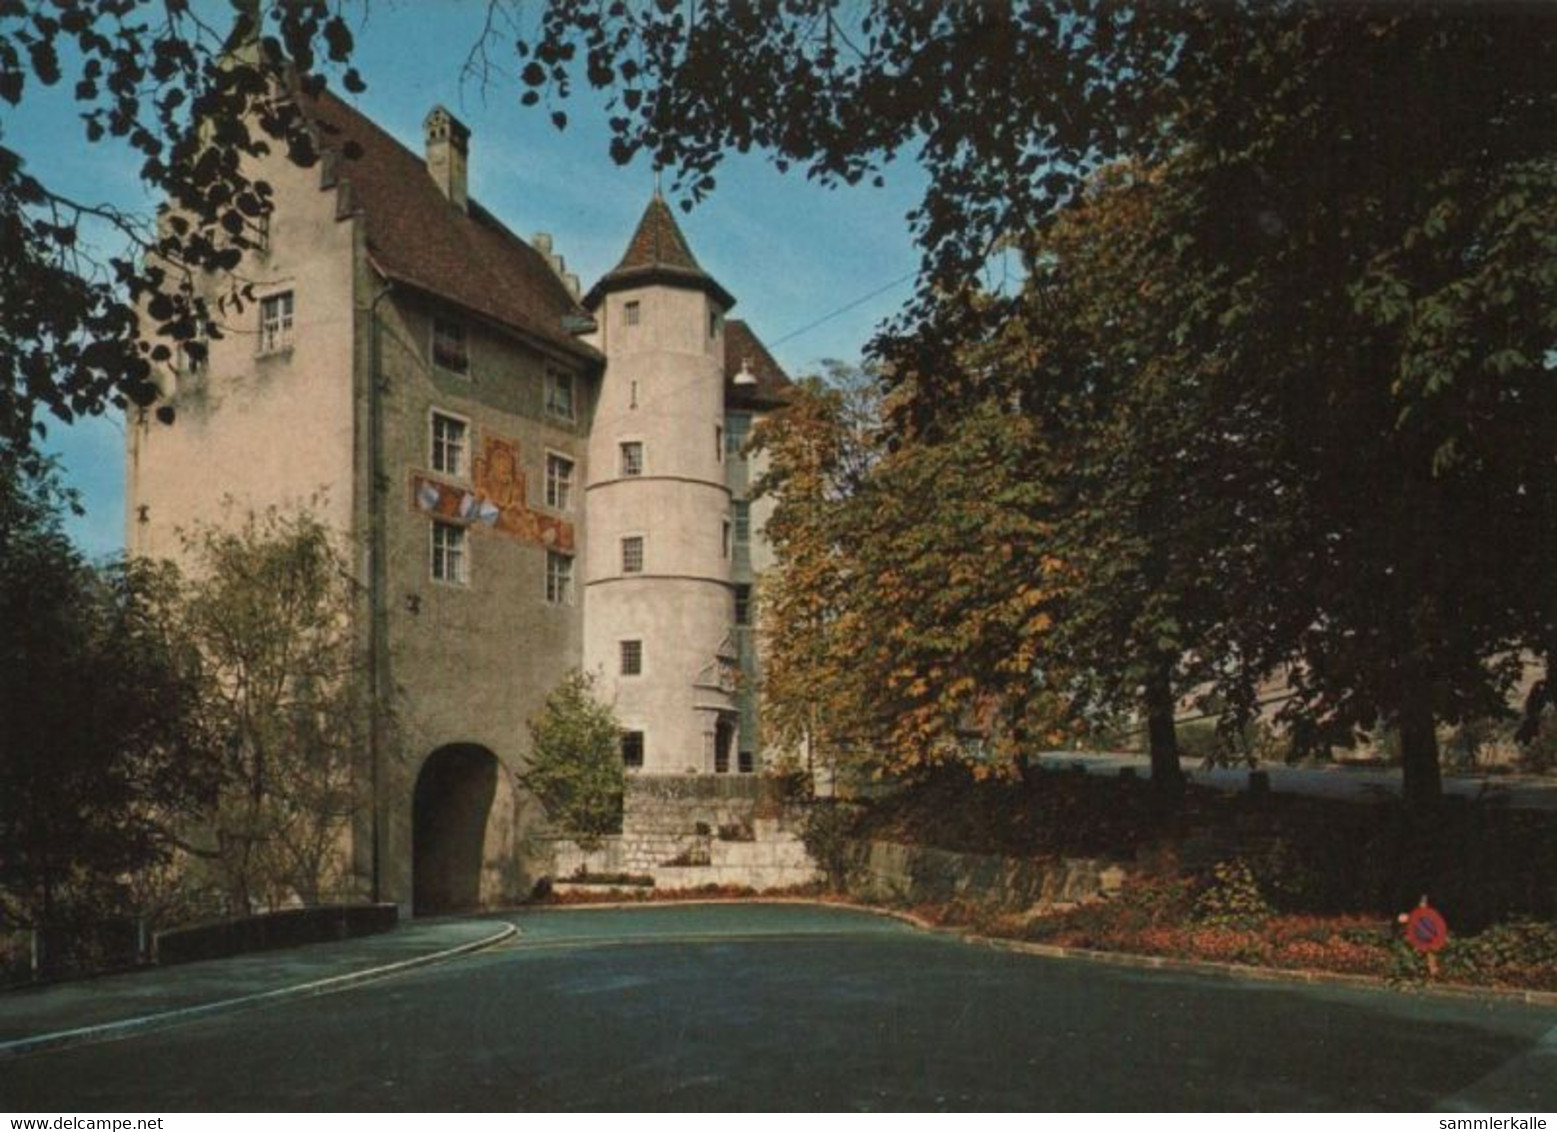 Schweiz - Baden - Landvogteischloss - Ca. 1980 - Postcard - Baden